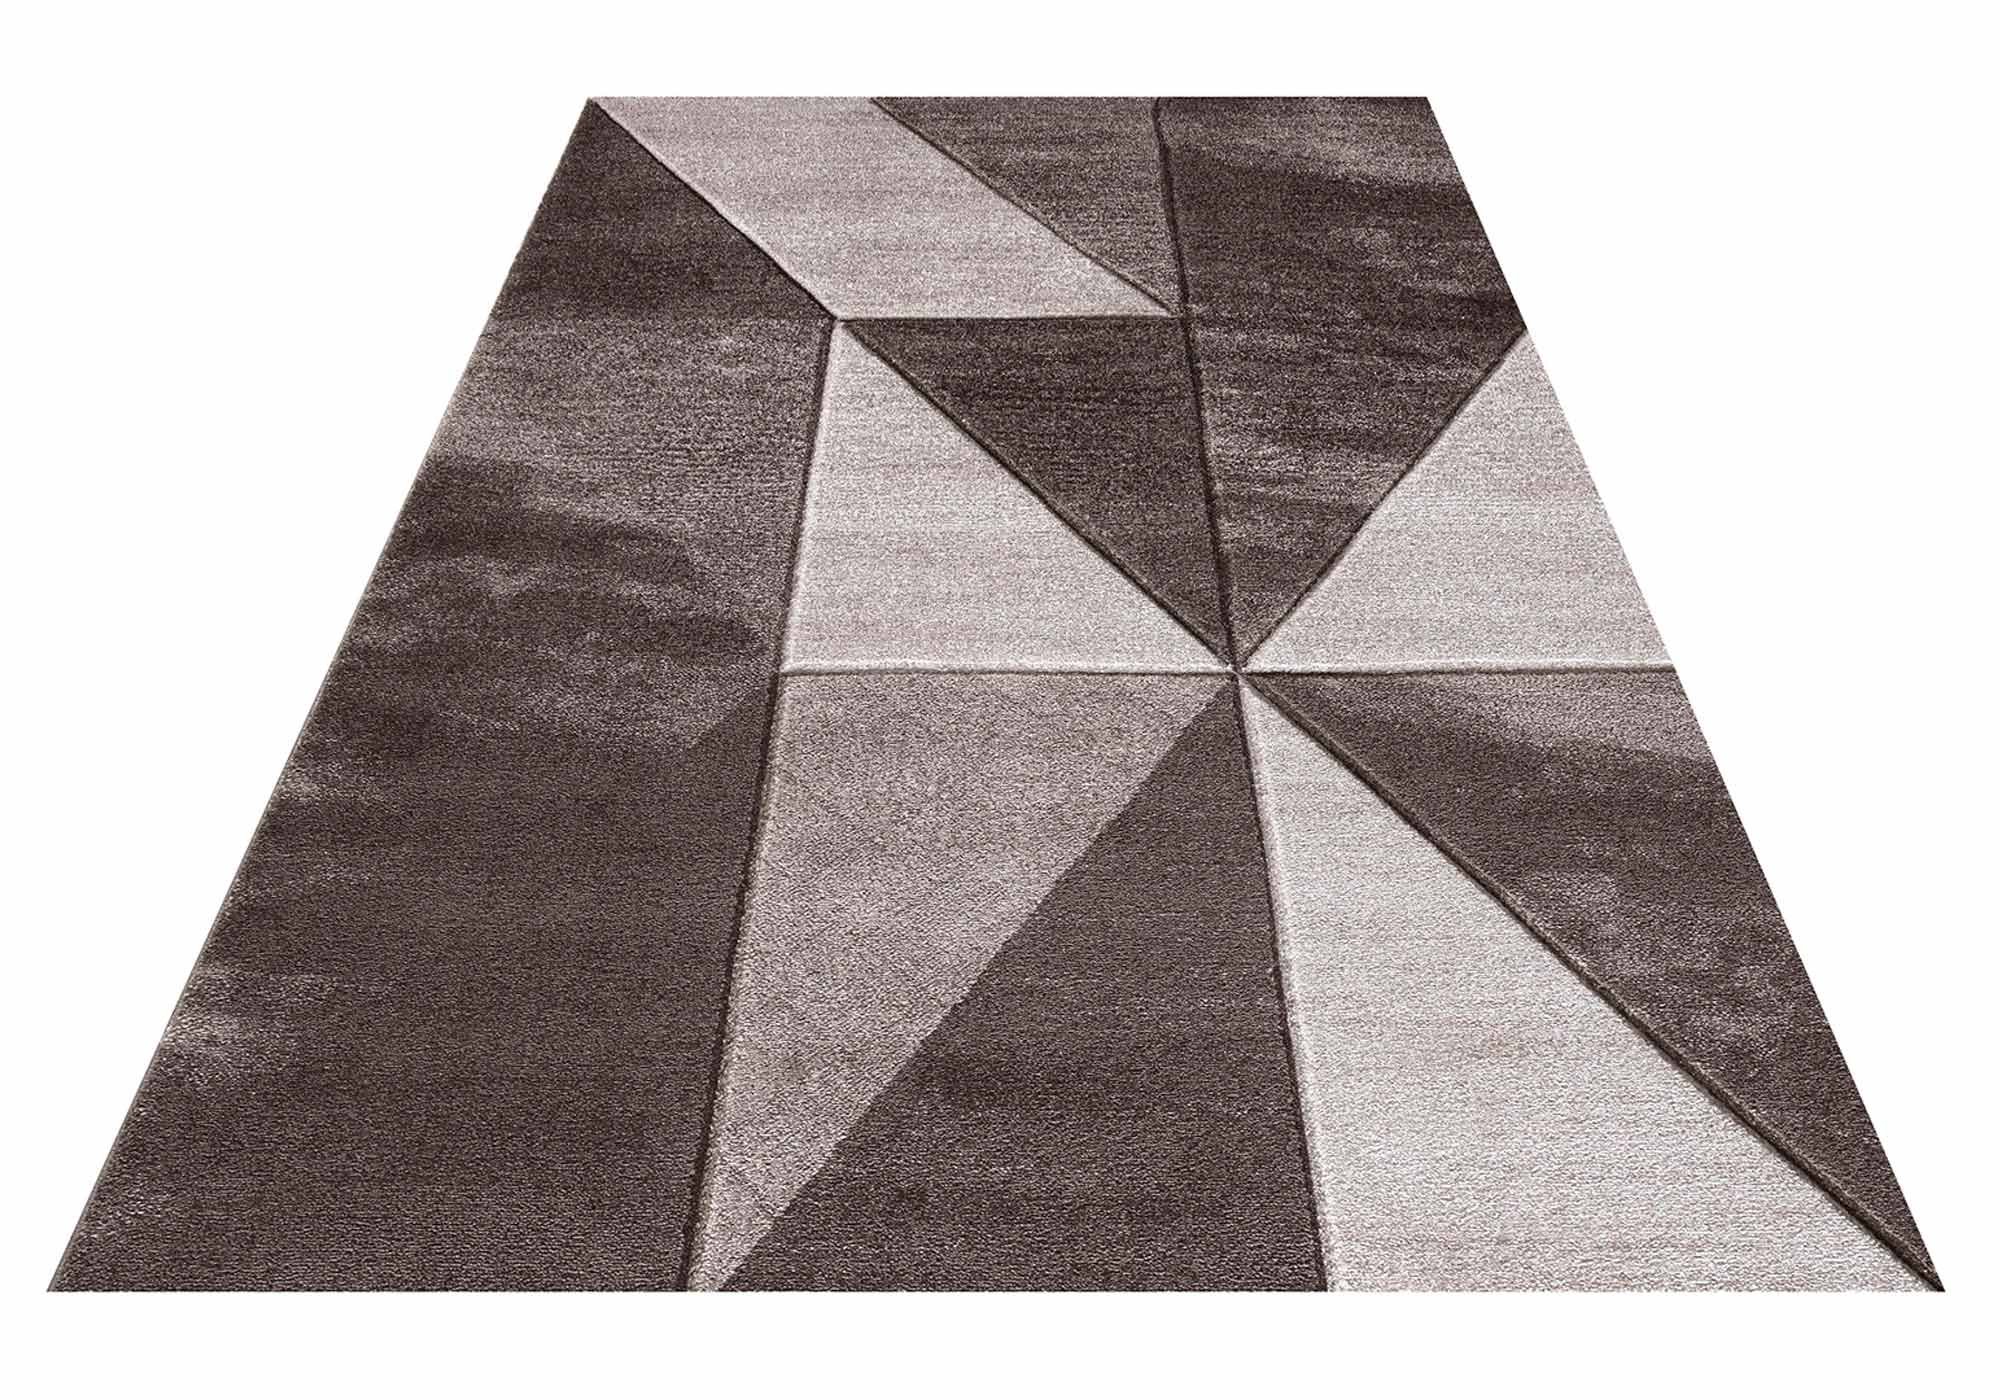 Festival Teppich 80 x 150 cm - beige - 11 mm Höhe - Konturenschnitt - Relax 210